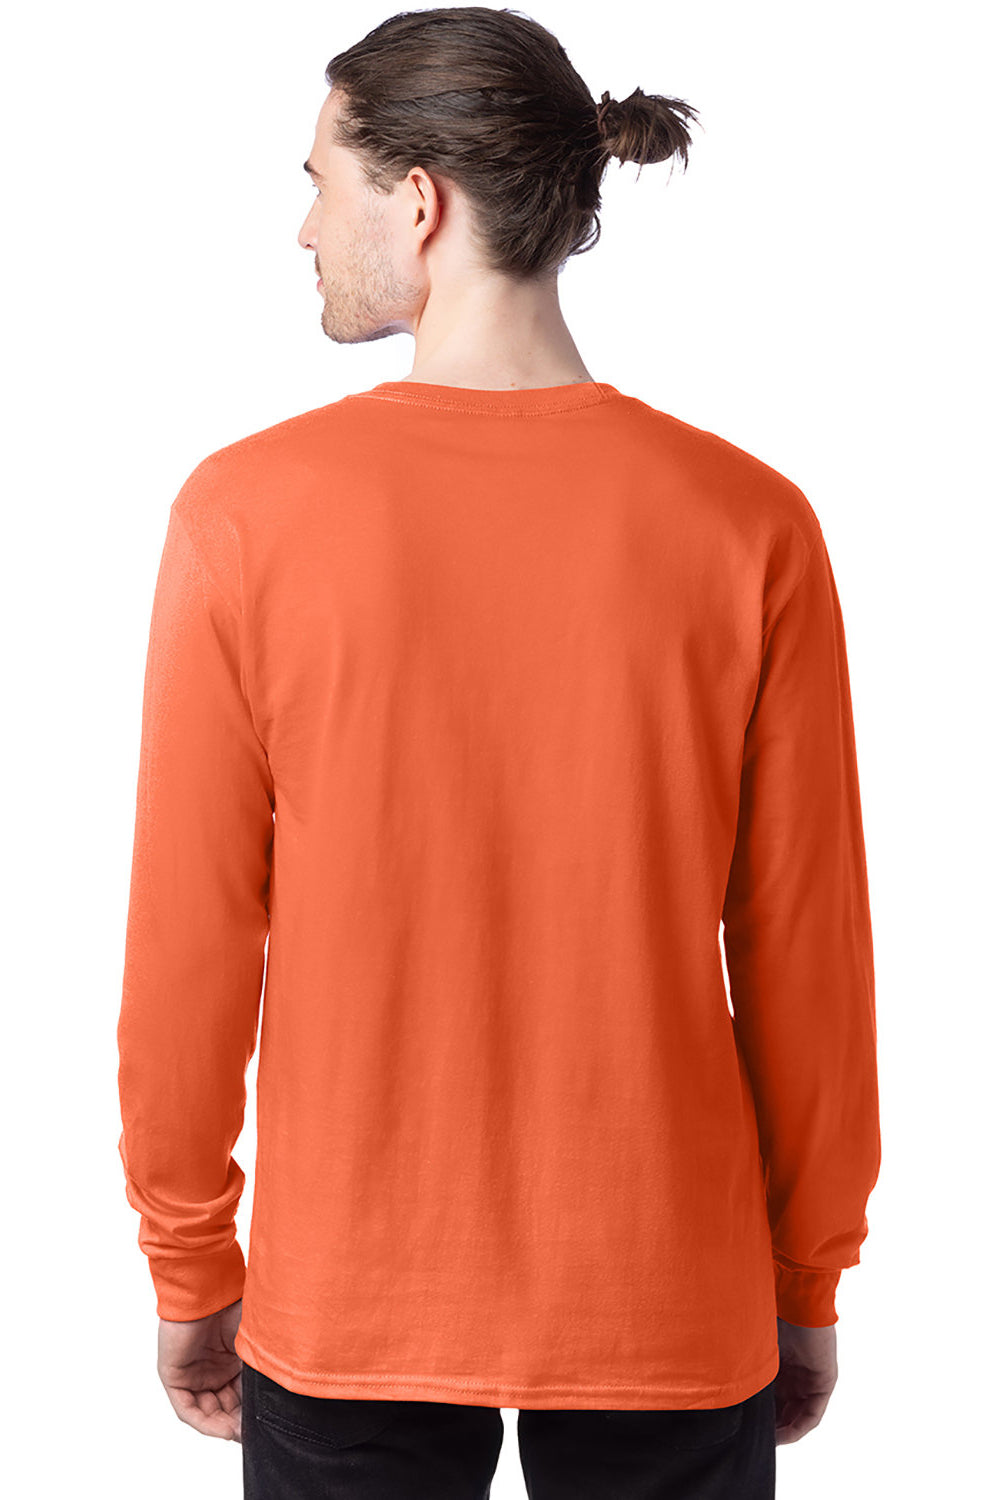 Hanes Men's TAGLESS Comfortsoft Long-Sleeve T-Shirt, Style 5286 